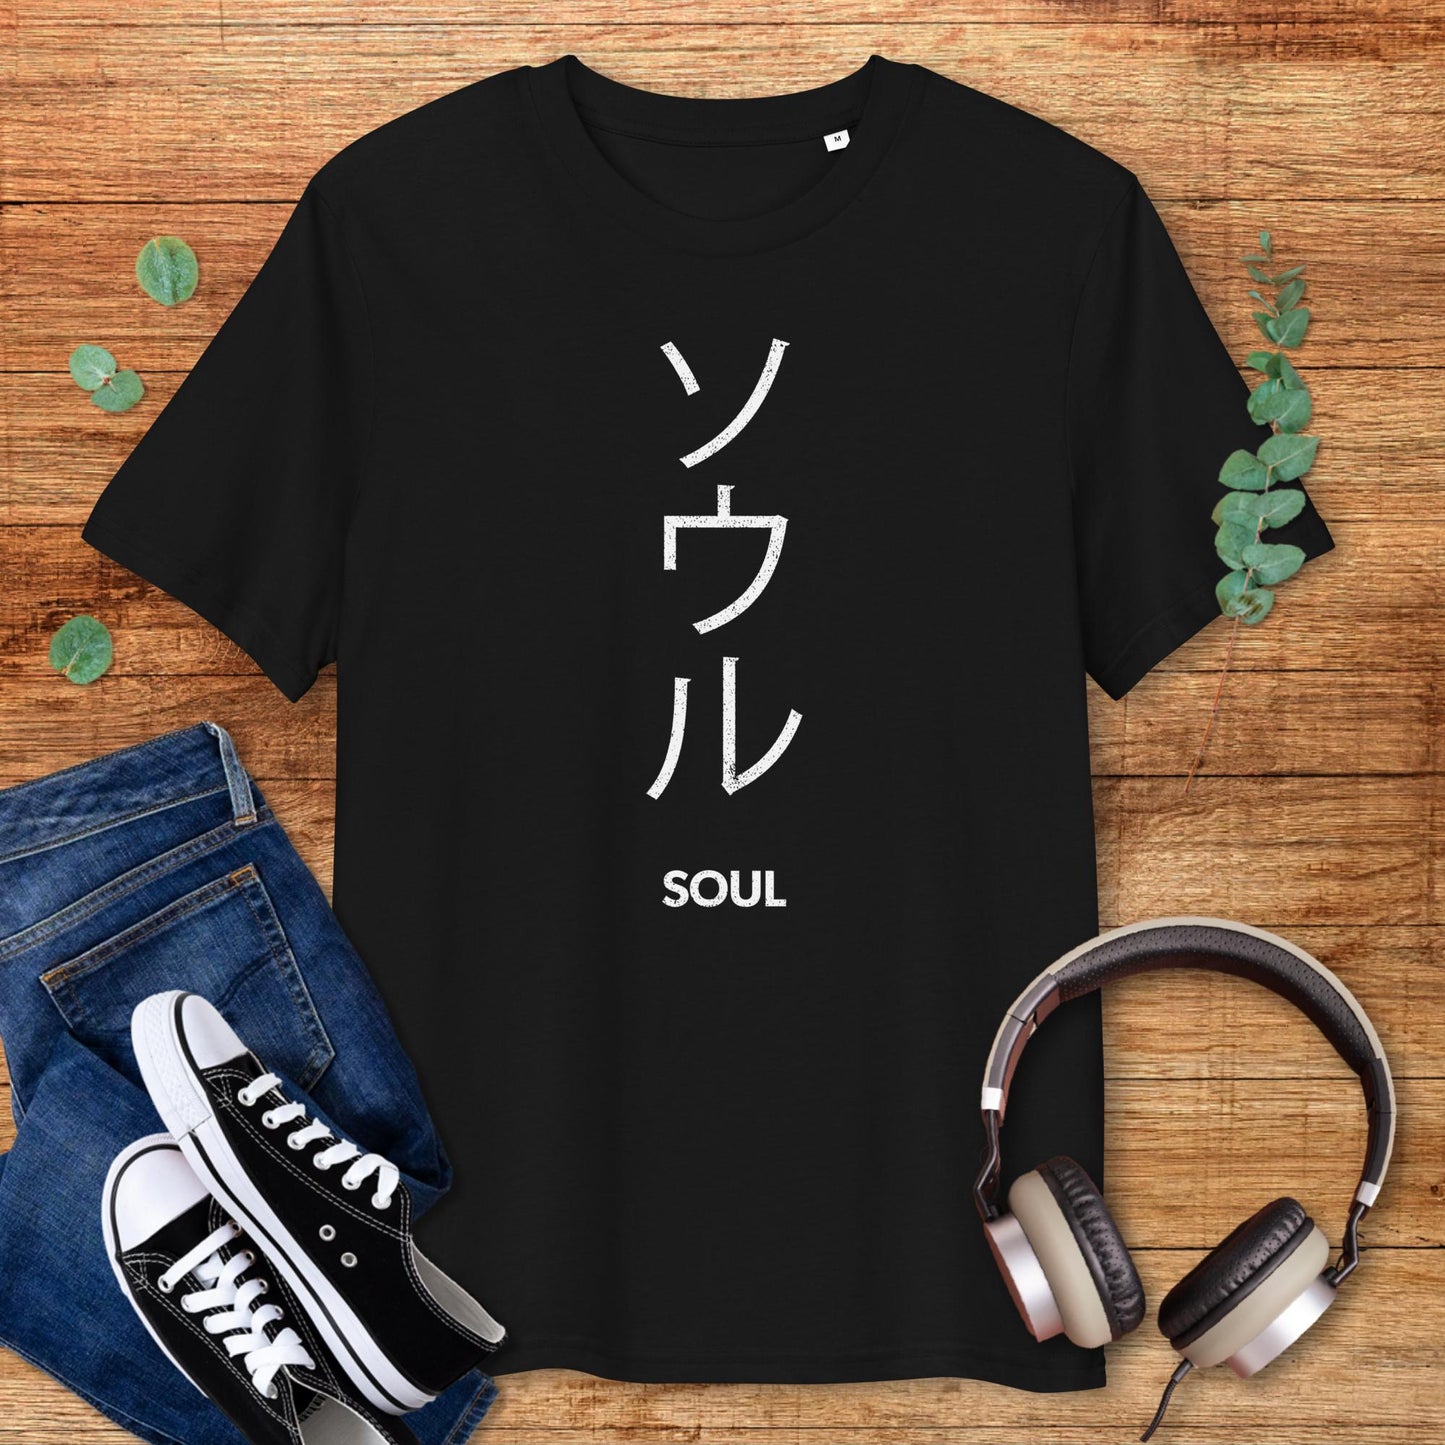 Soul in Japanese